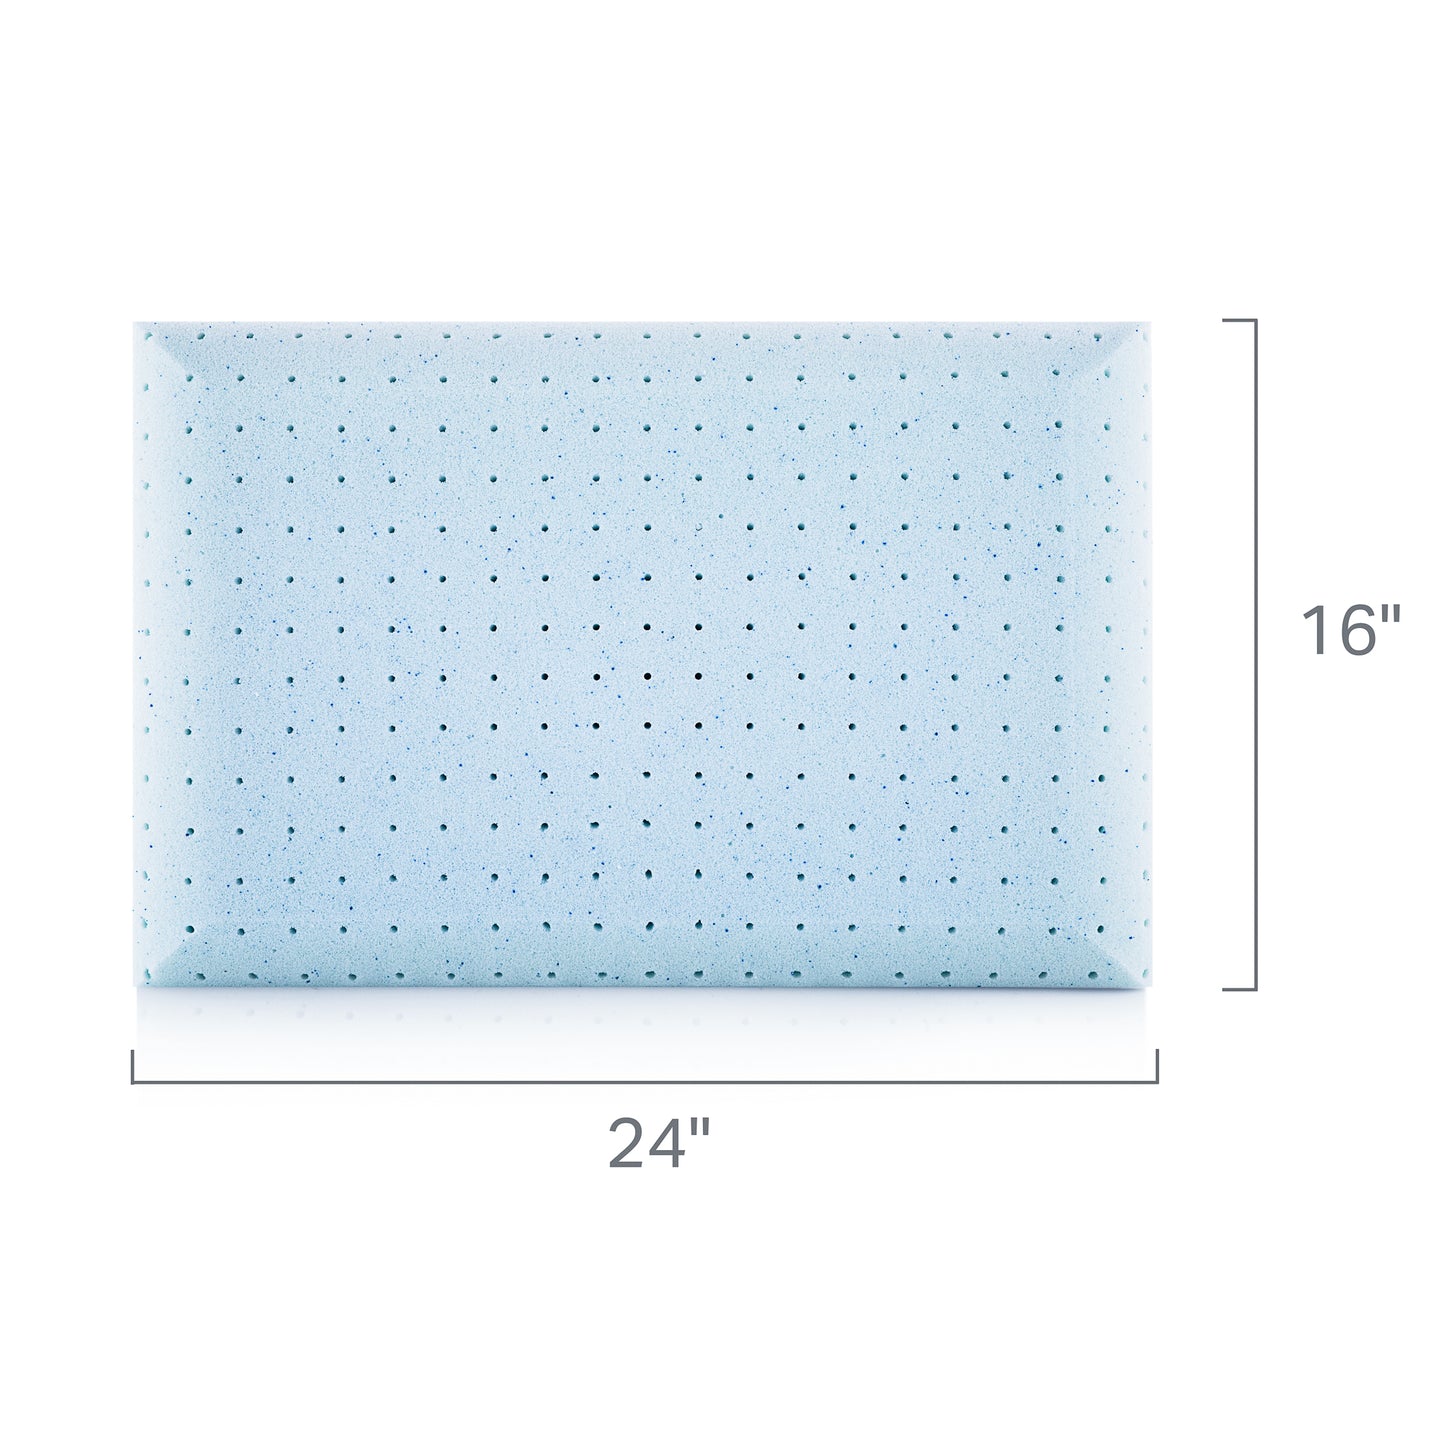 Hyperchill Technology Gel Memory Foam Pillow Plus Reversible Cooling Cover